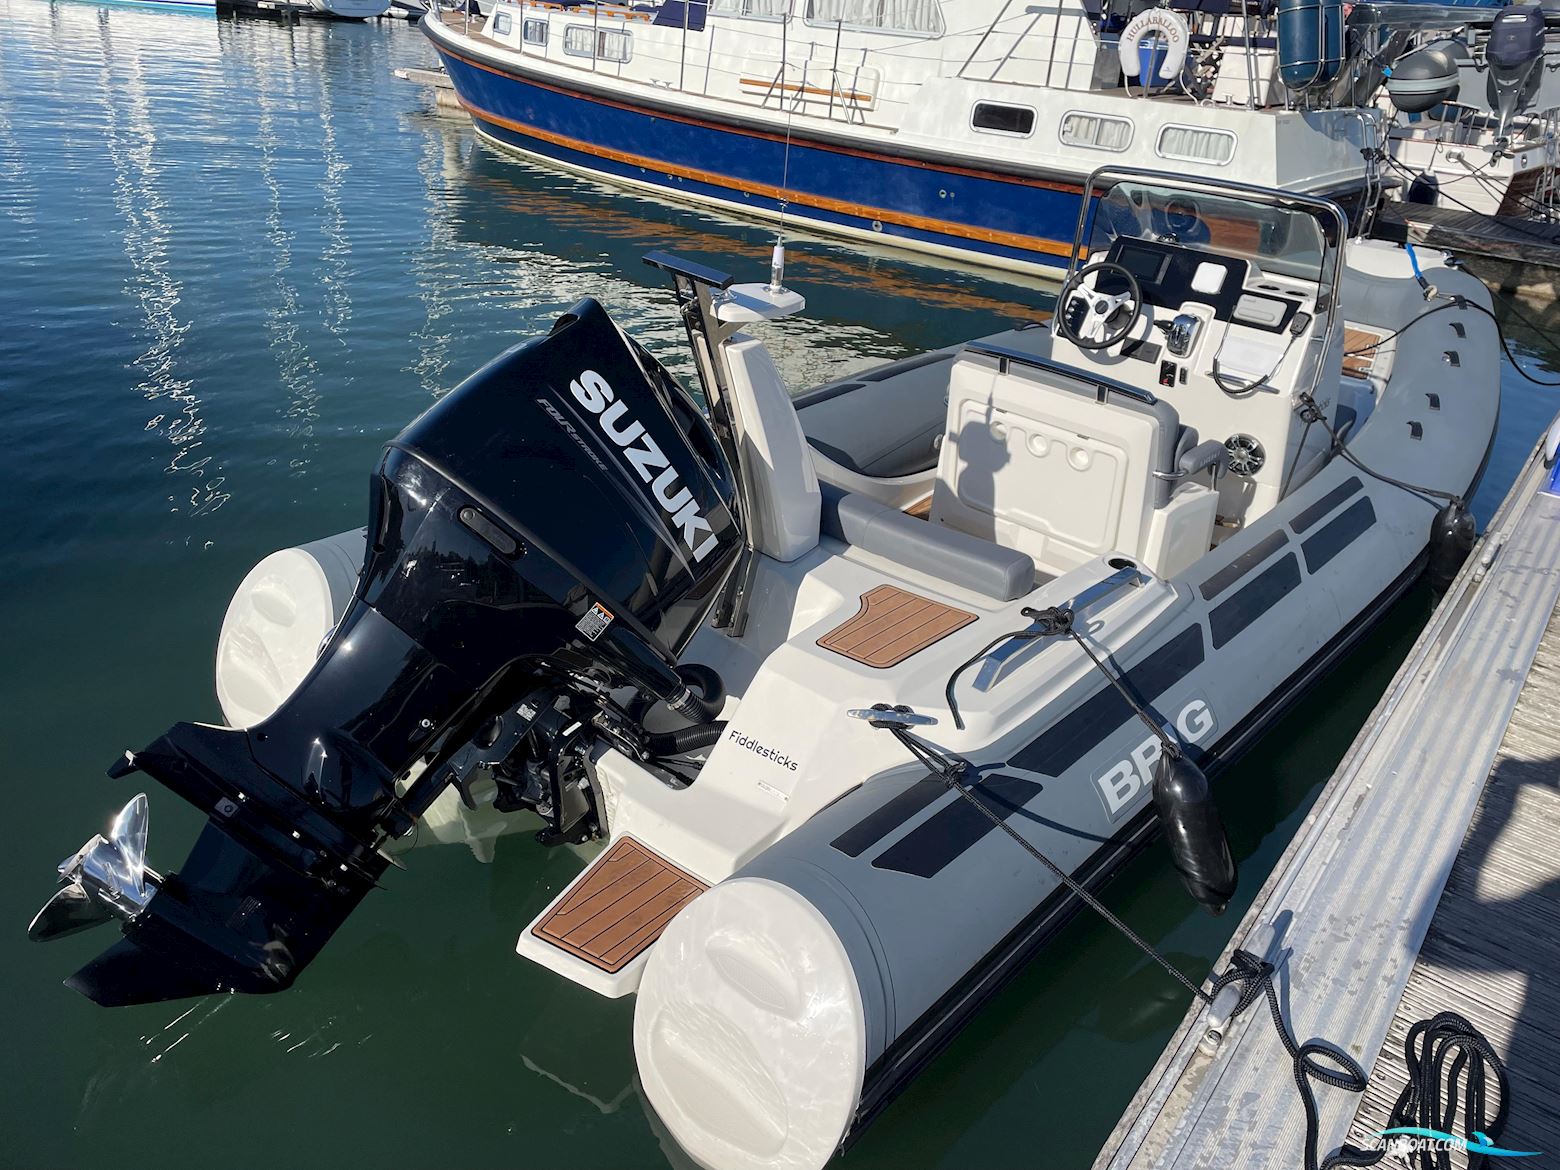 Brig Ribs Eagle 6.7 Schlauchboot / Rib 2021, mit Suzuki motor, England